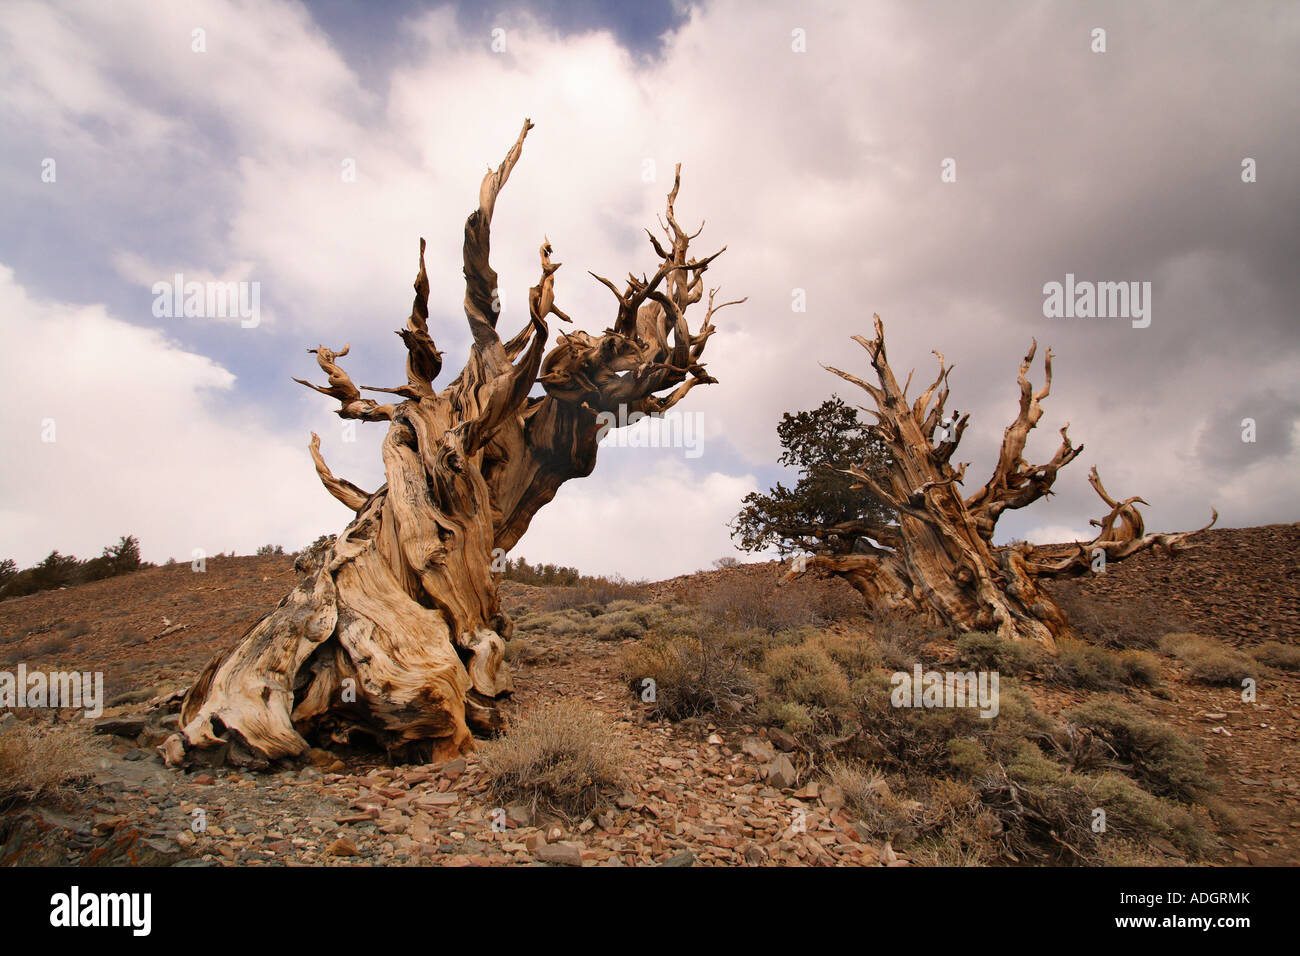 Bristlecone Pine Tree, Sierra Nevada Mountains, California Stock Photo